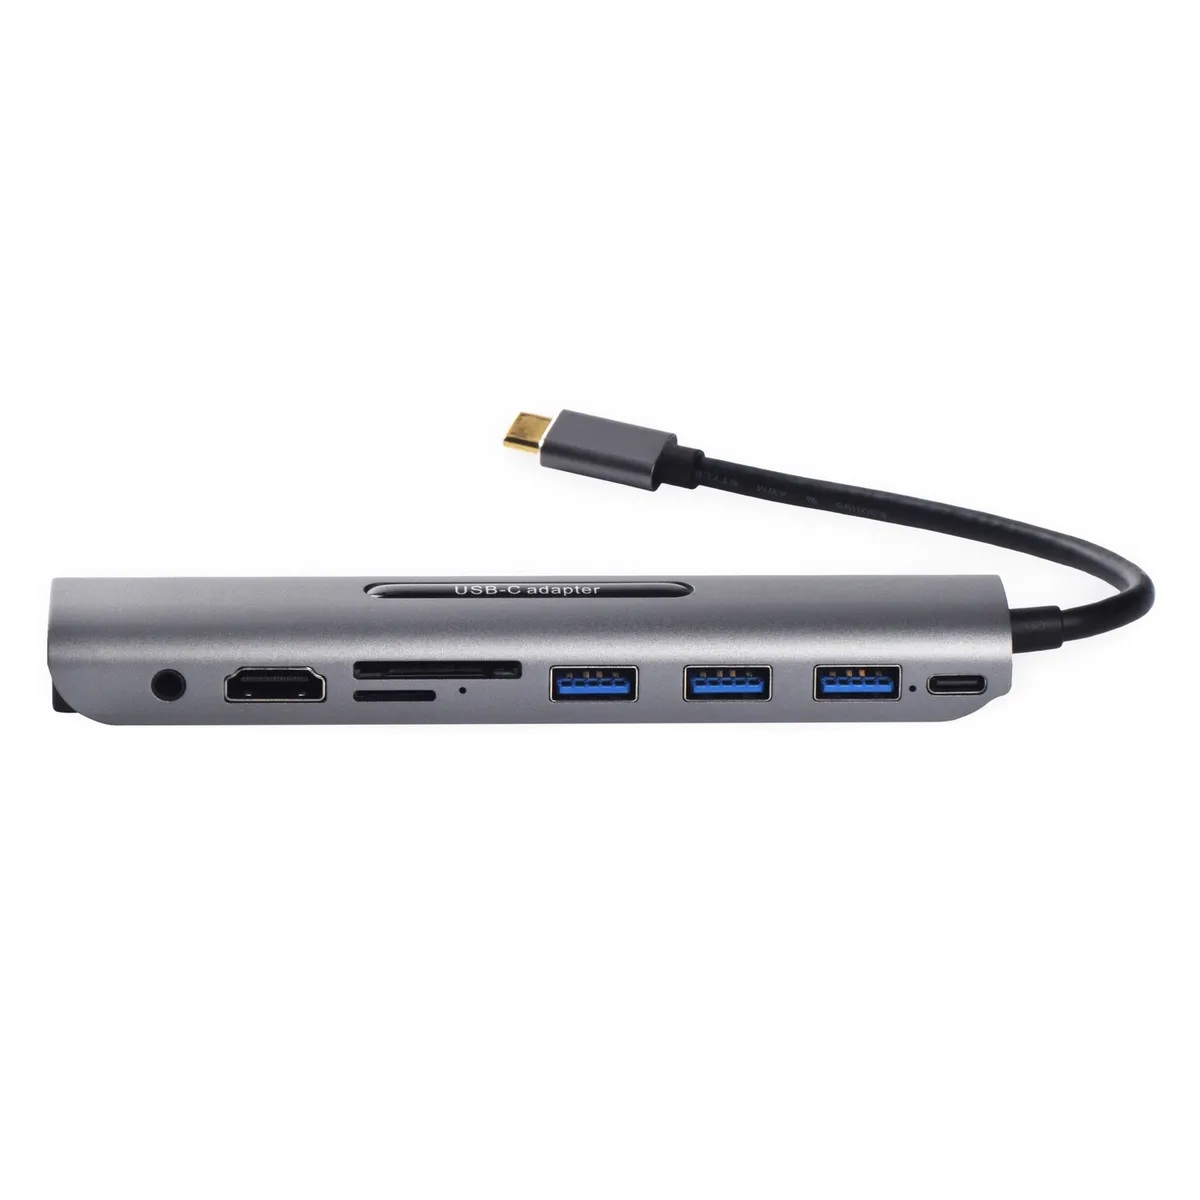 USB-концентратор iNeez Multi-Port 9-in-1 V161B Type-C